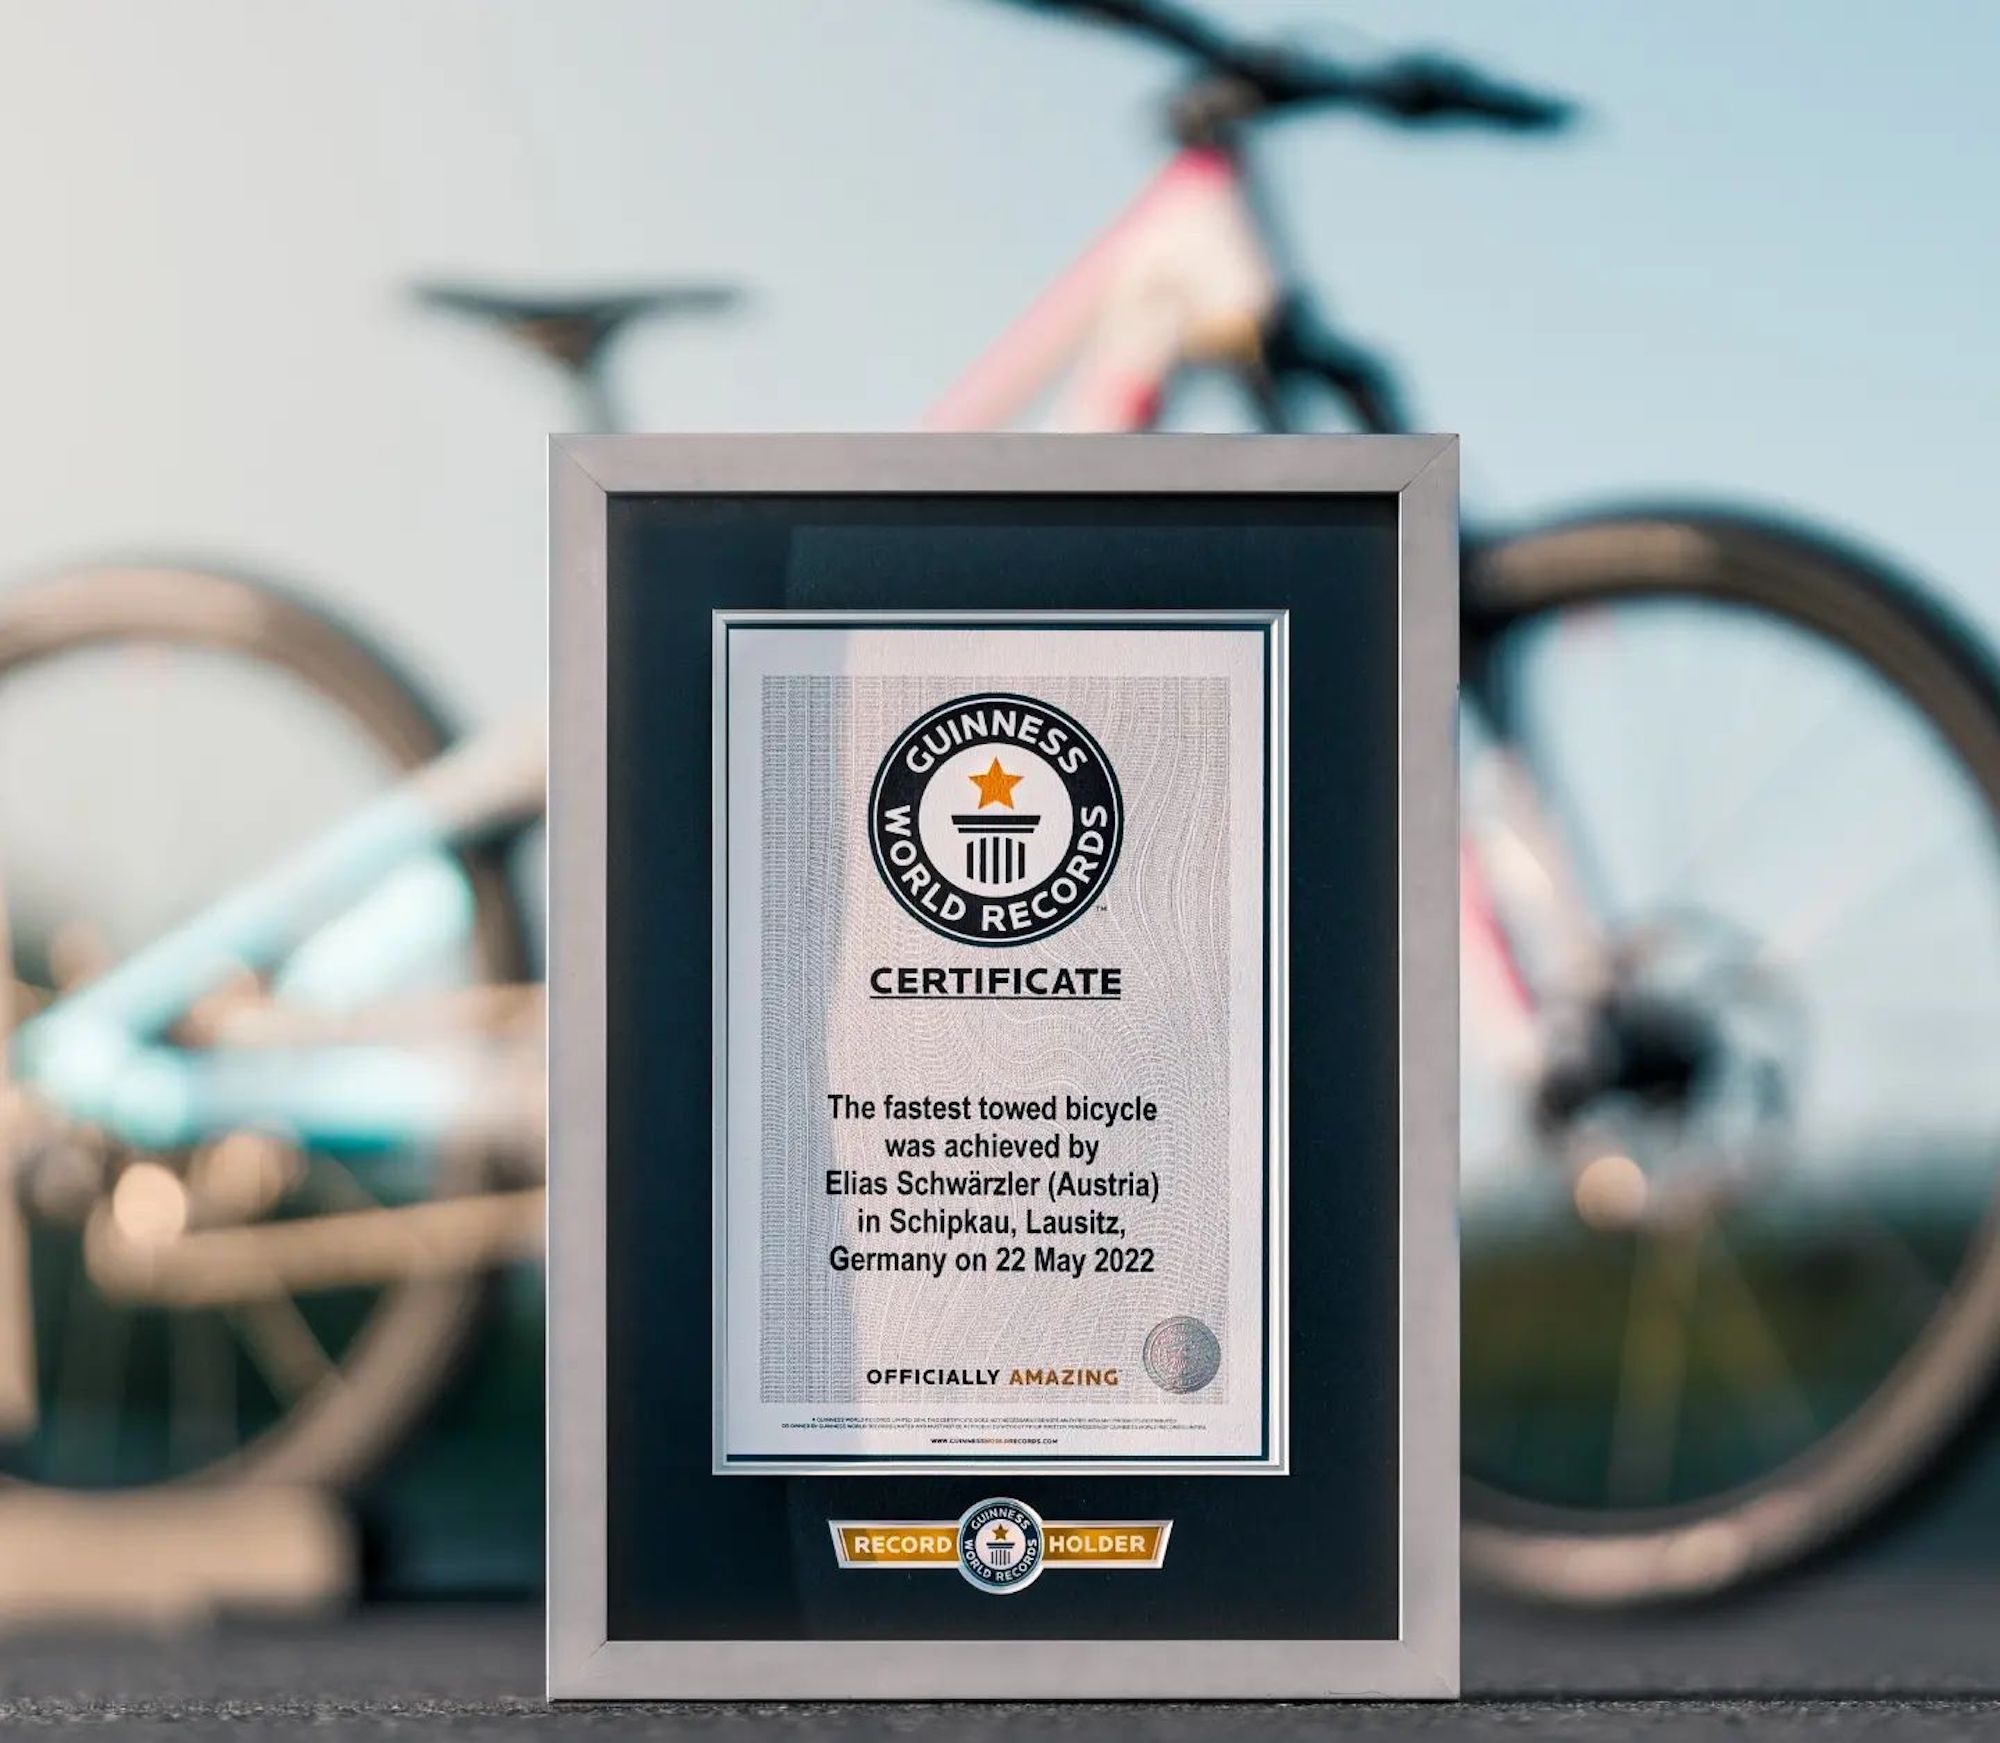 Elias Schwärzler和Geri Gesslbauer打破了吉尼斯世界纪录，创造了“有史以来由摩托车牵引的最快标准自行车”。媒体来源伊莱亚斯的脸书。